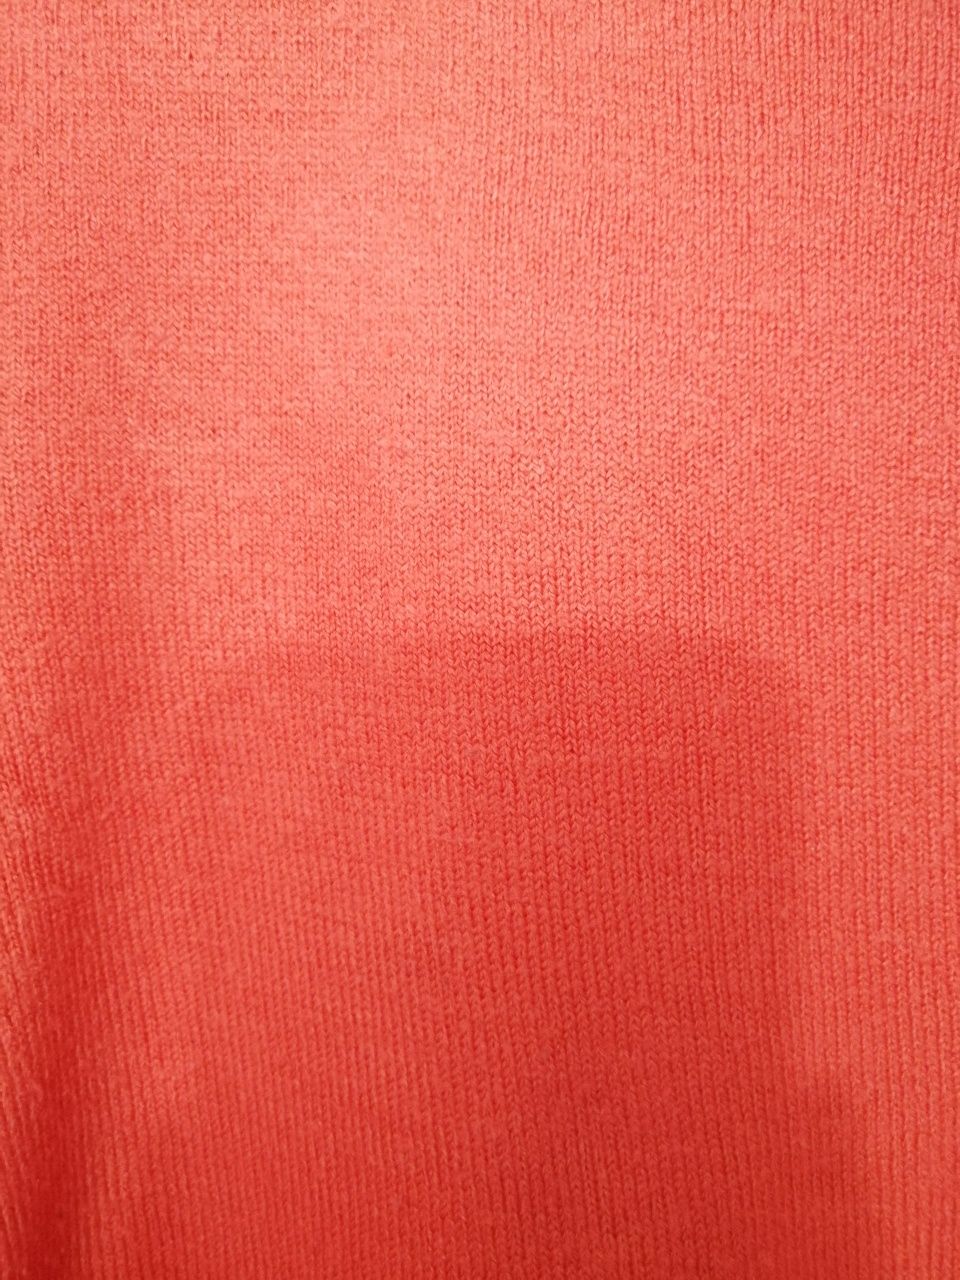 Bluzka sweterkowa damska pep&co XL